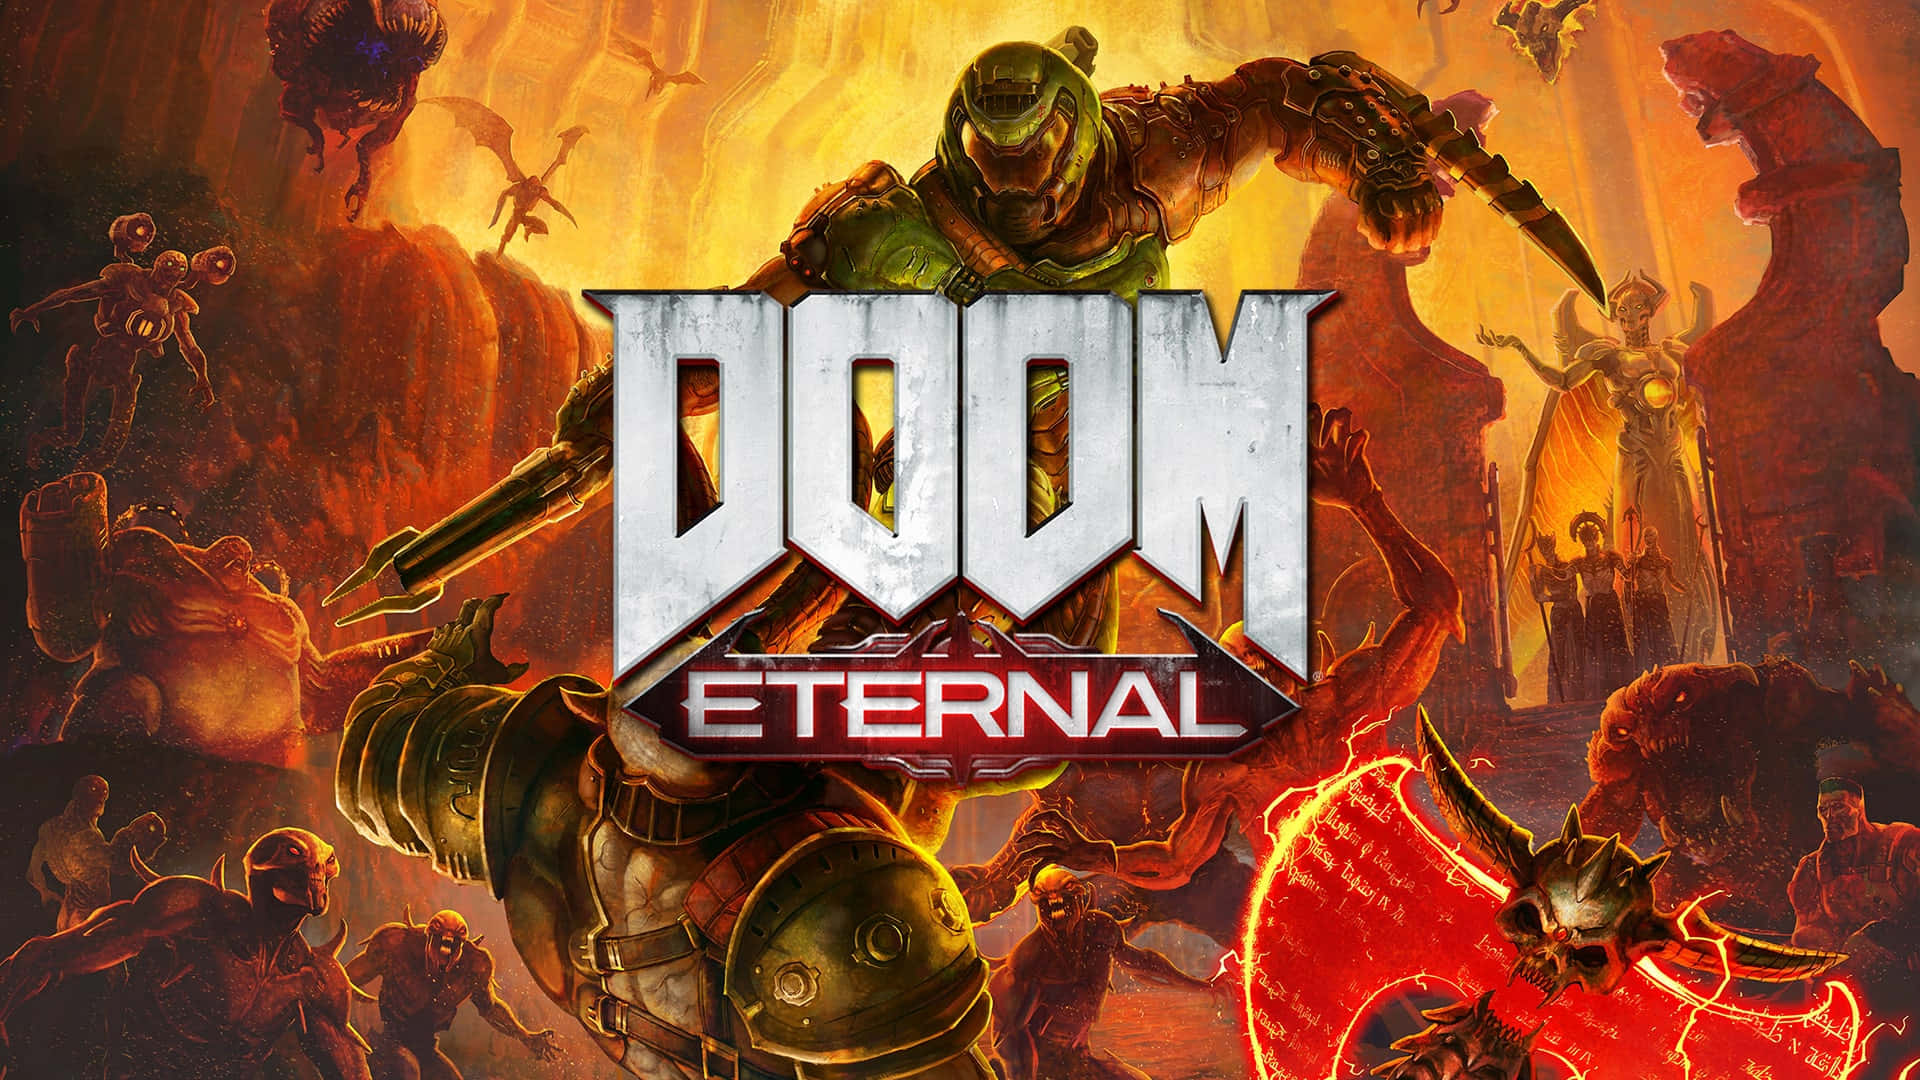 Doom Eternal Hd Wallpaper